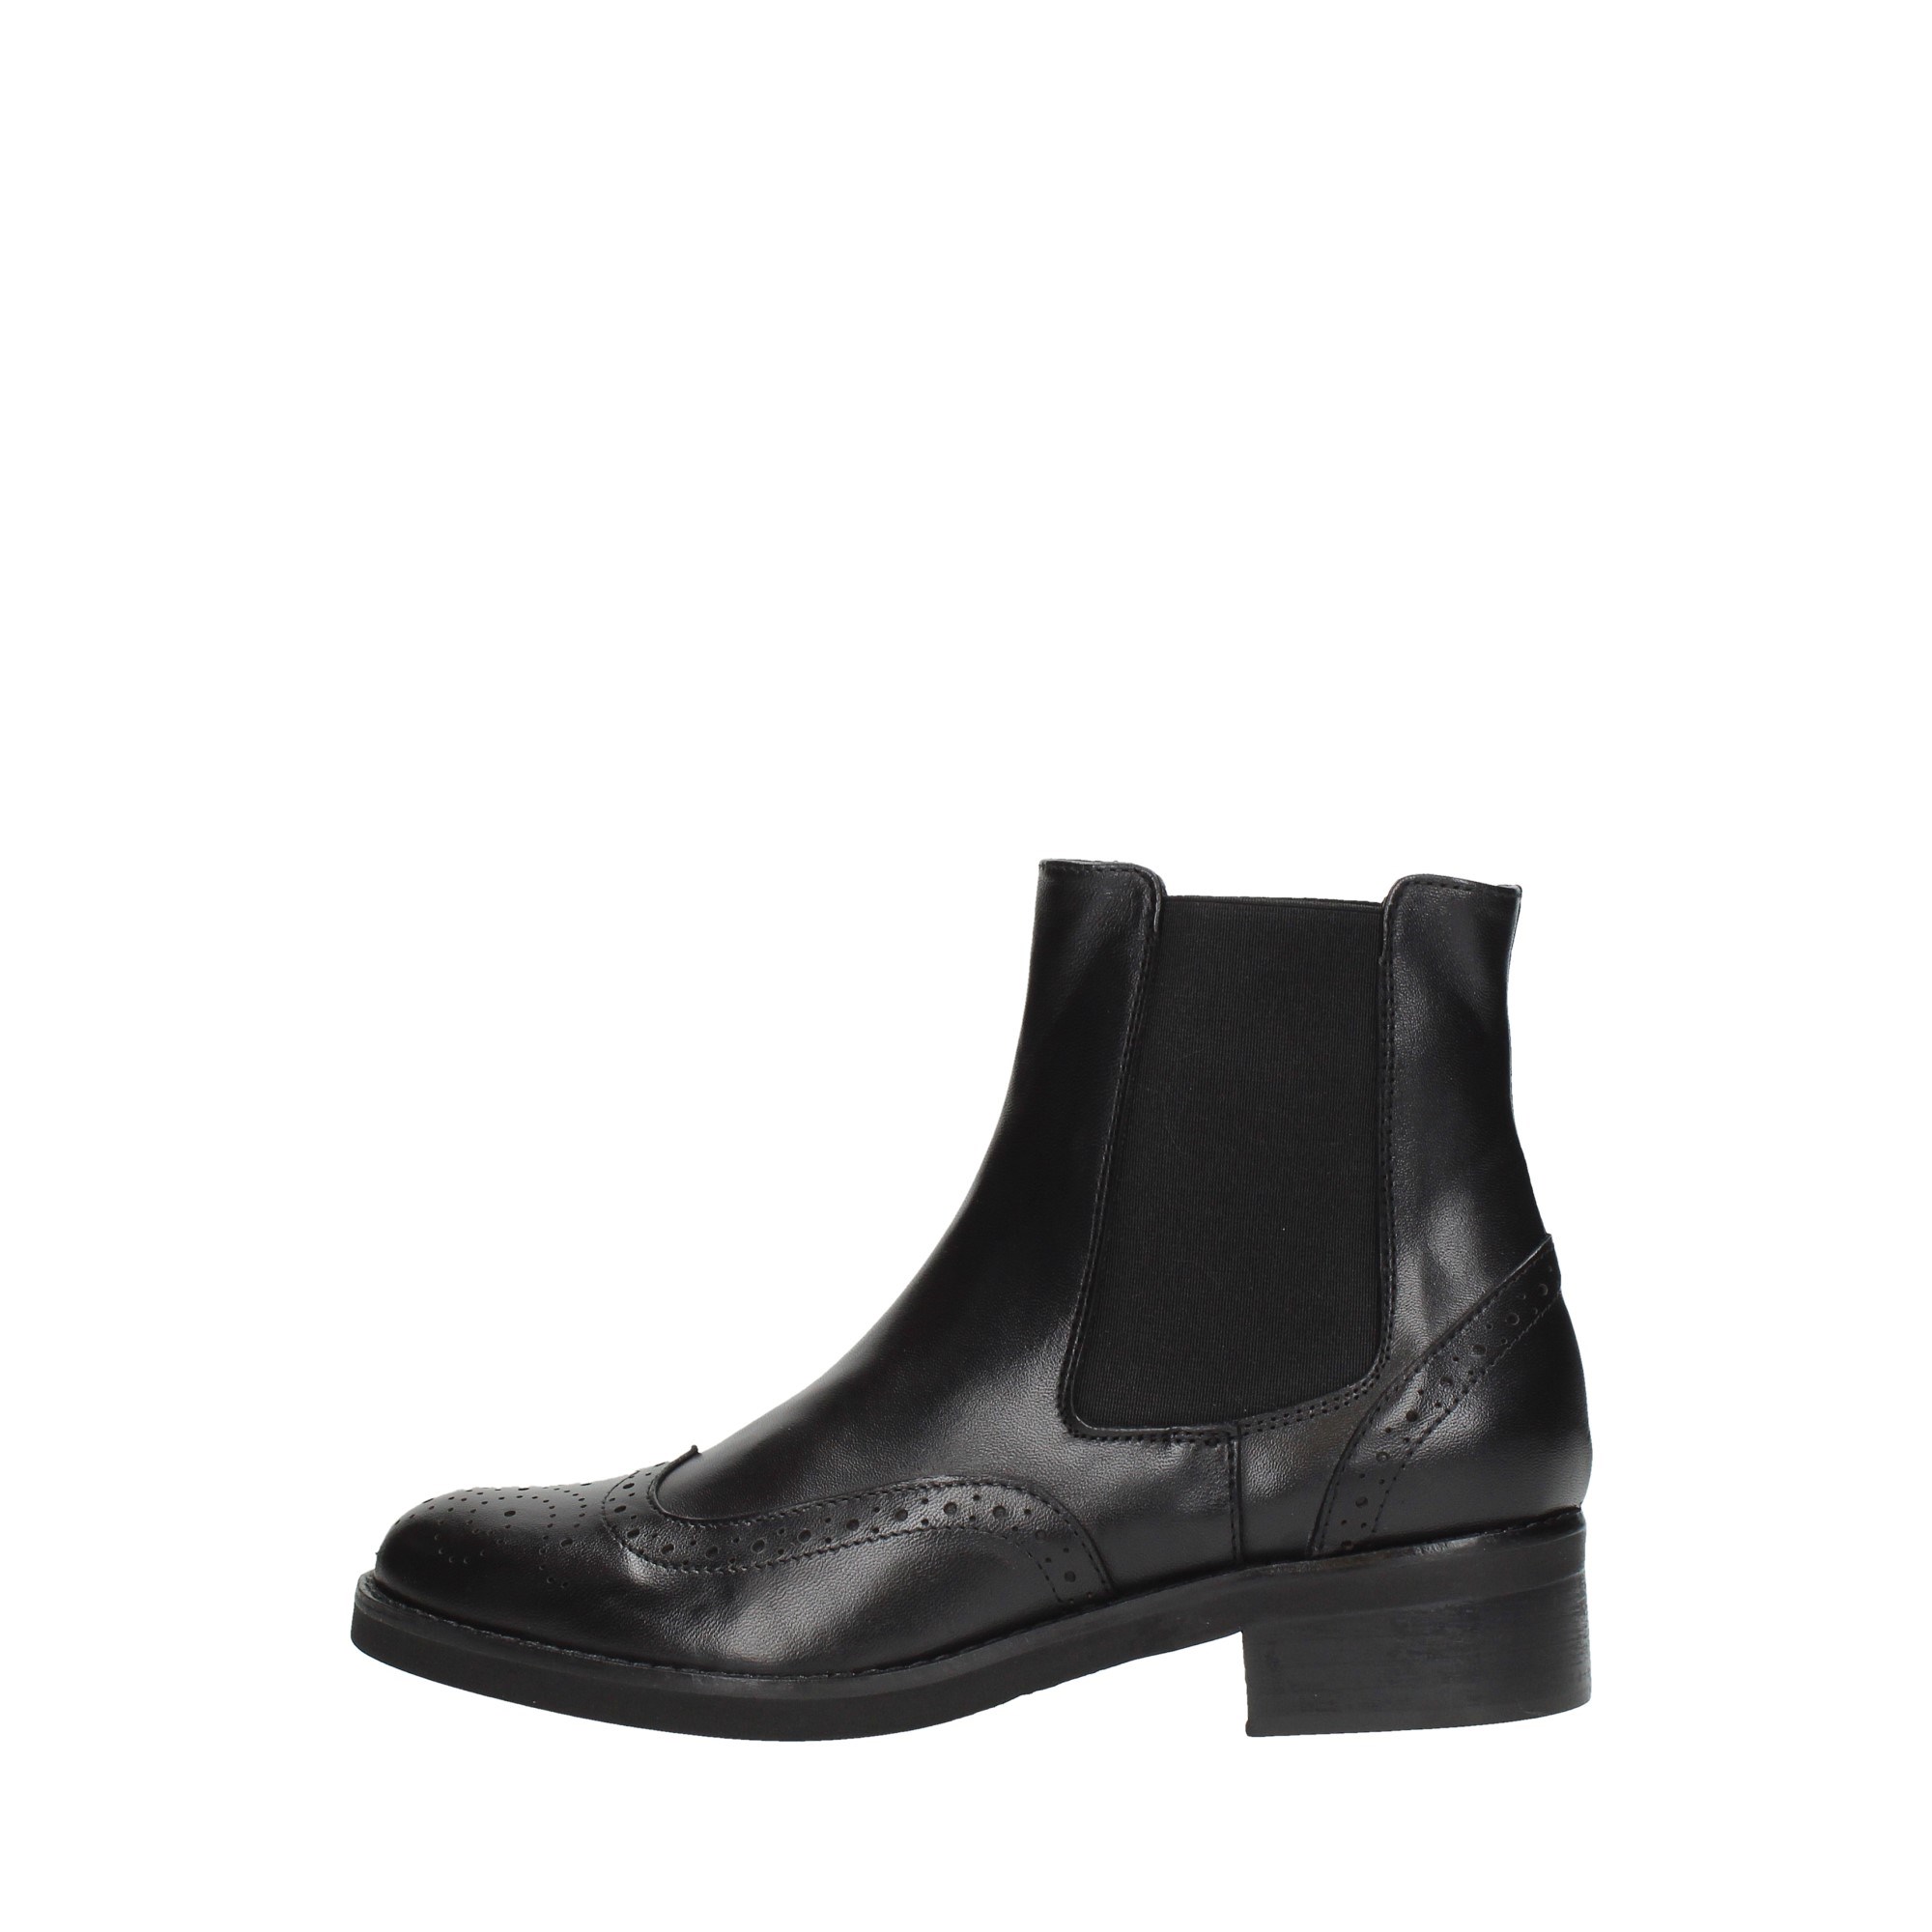 Pierfrancesco-vincenzi Shoes Women Booties Black 5466